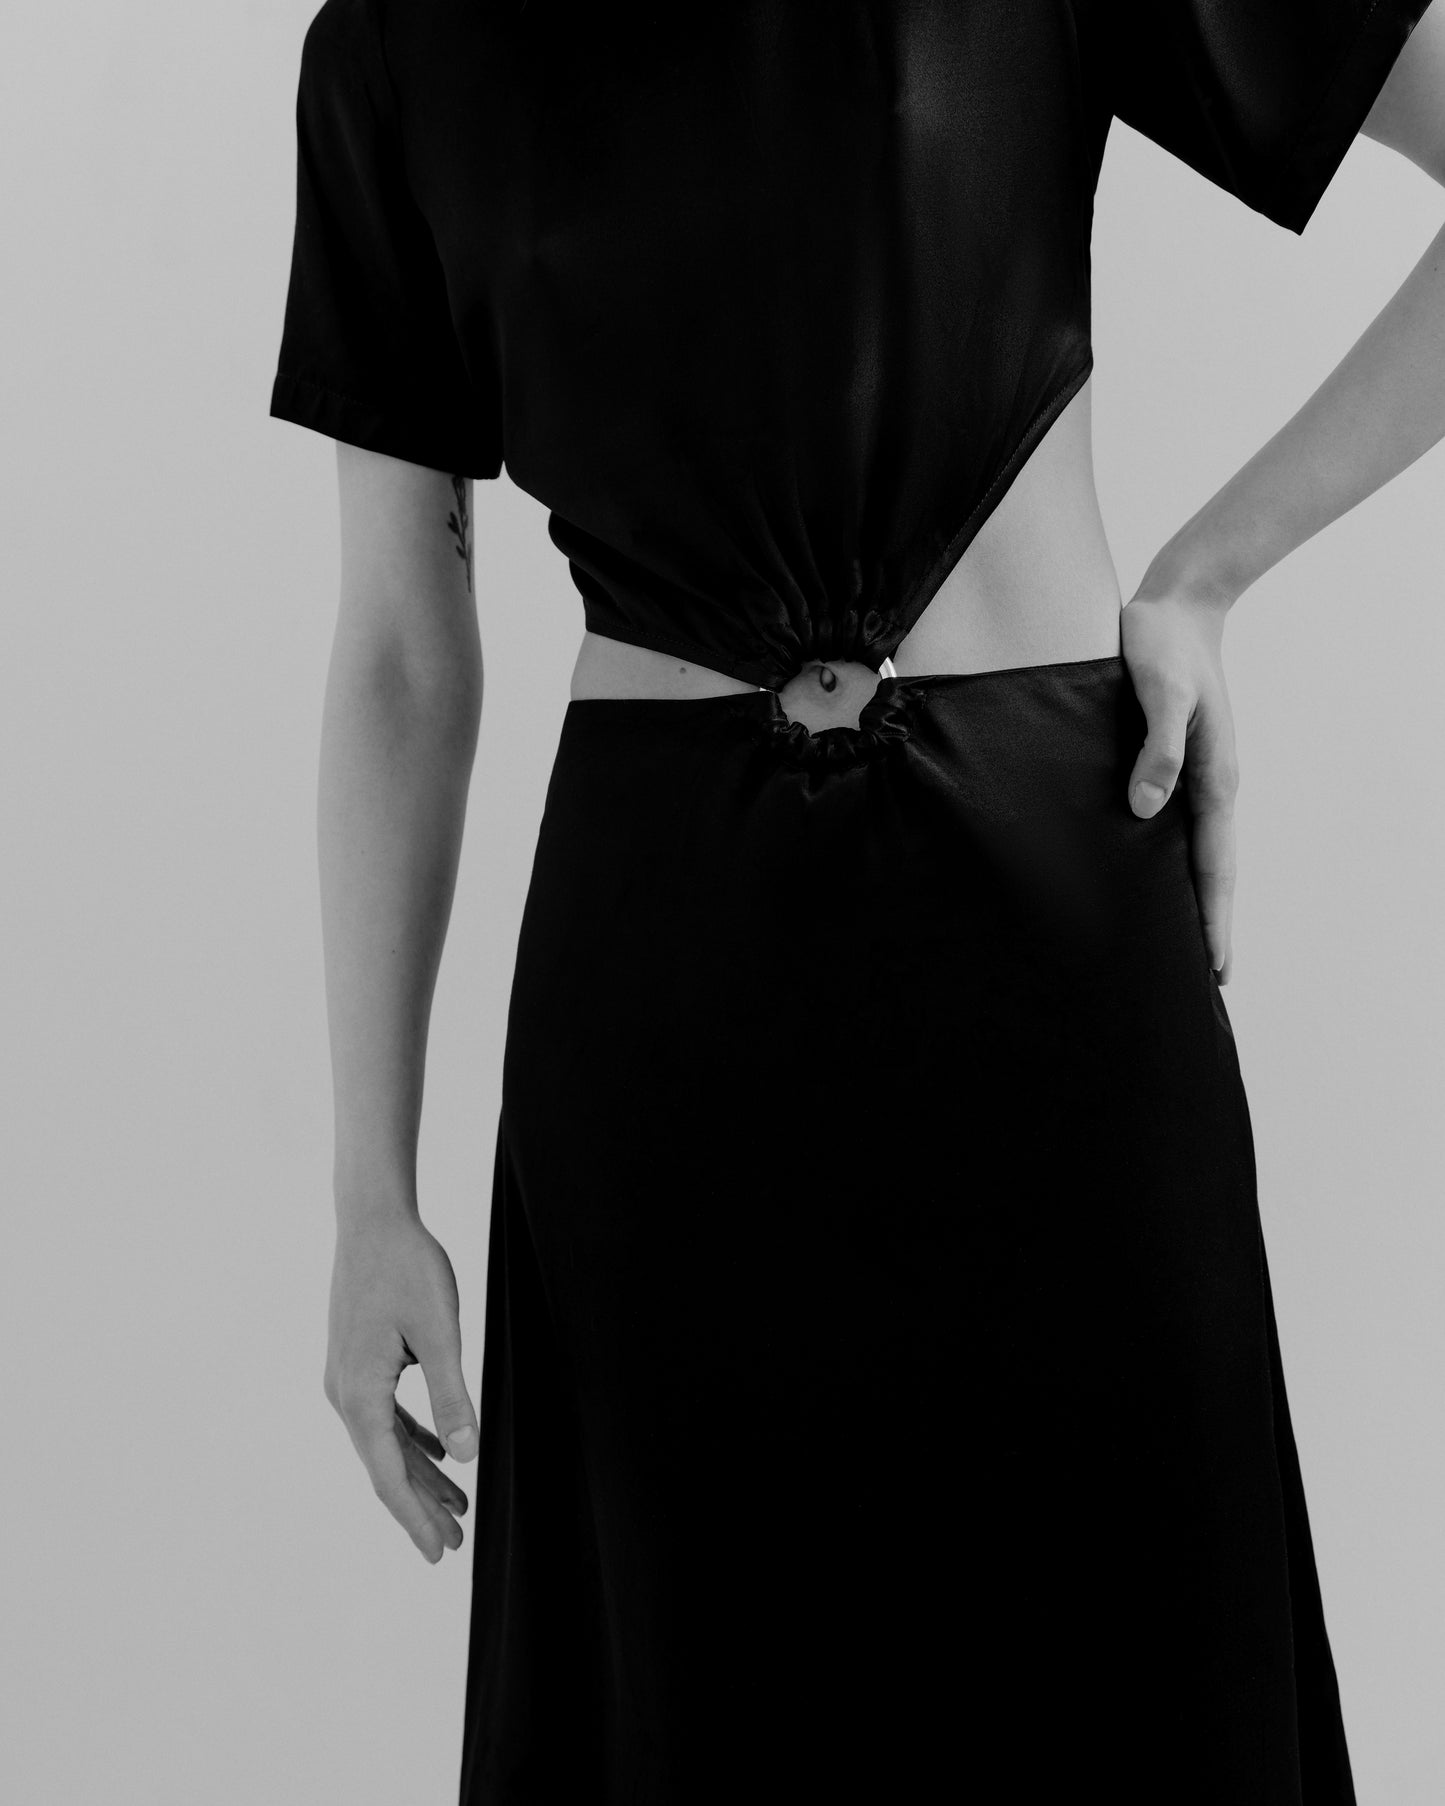 Asymmetric cut-out midi dress (convertible — dress, top, skirt in 1)-Dress-Forma Brand